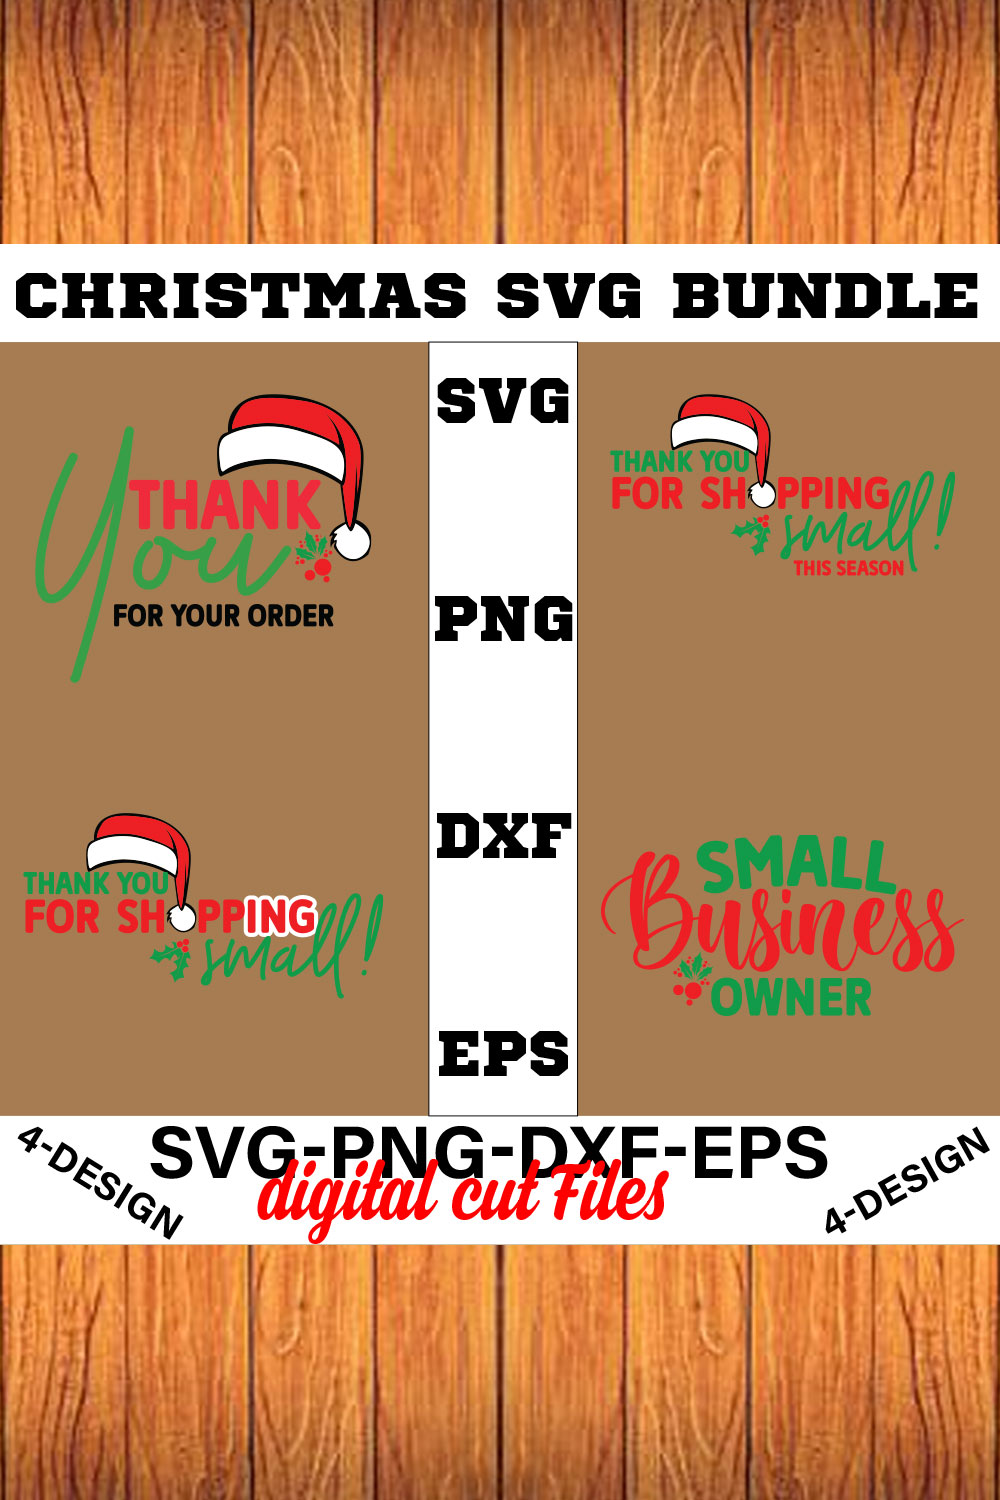 Secret Santa SVG file - SVG cut files.com